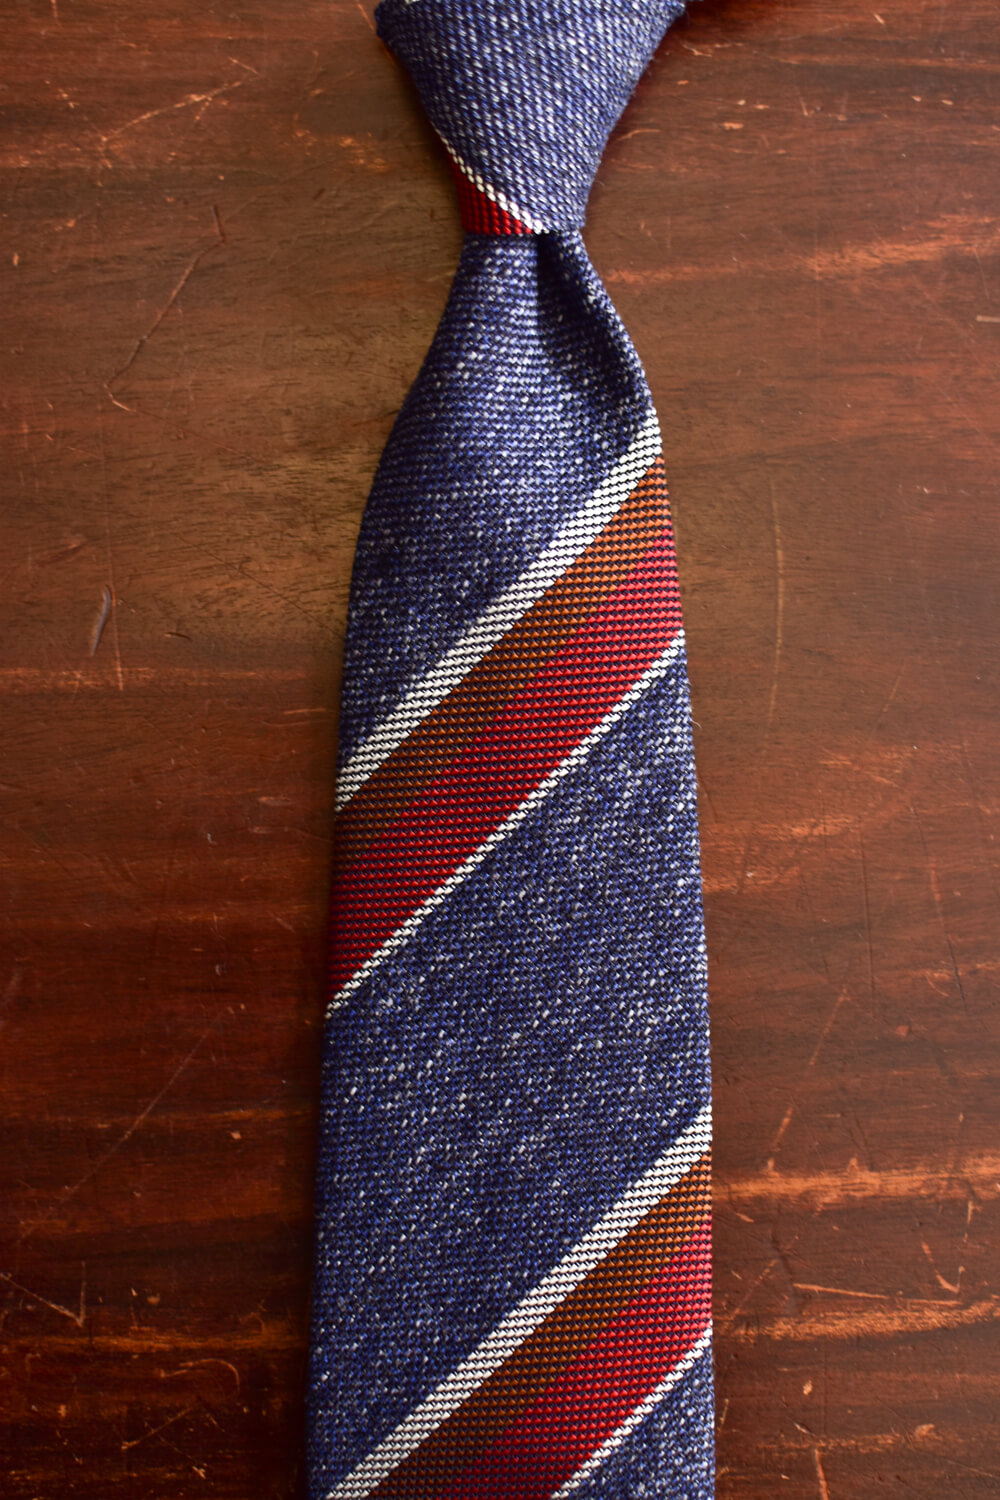 Cravate club non doublée bleu chambray rayres rouge